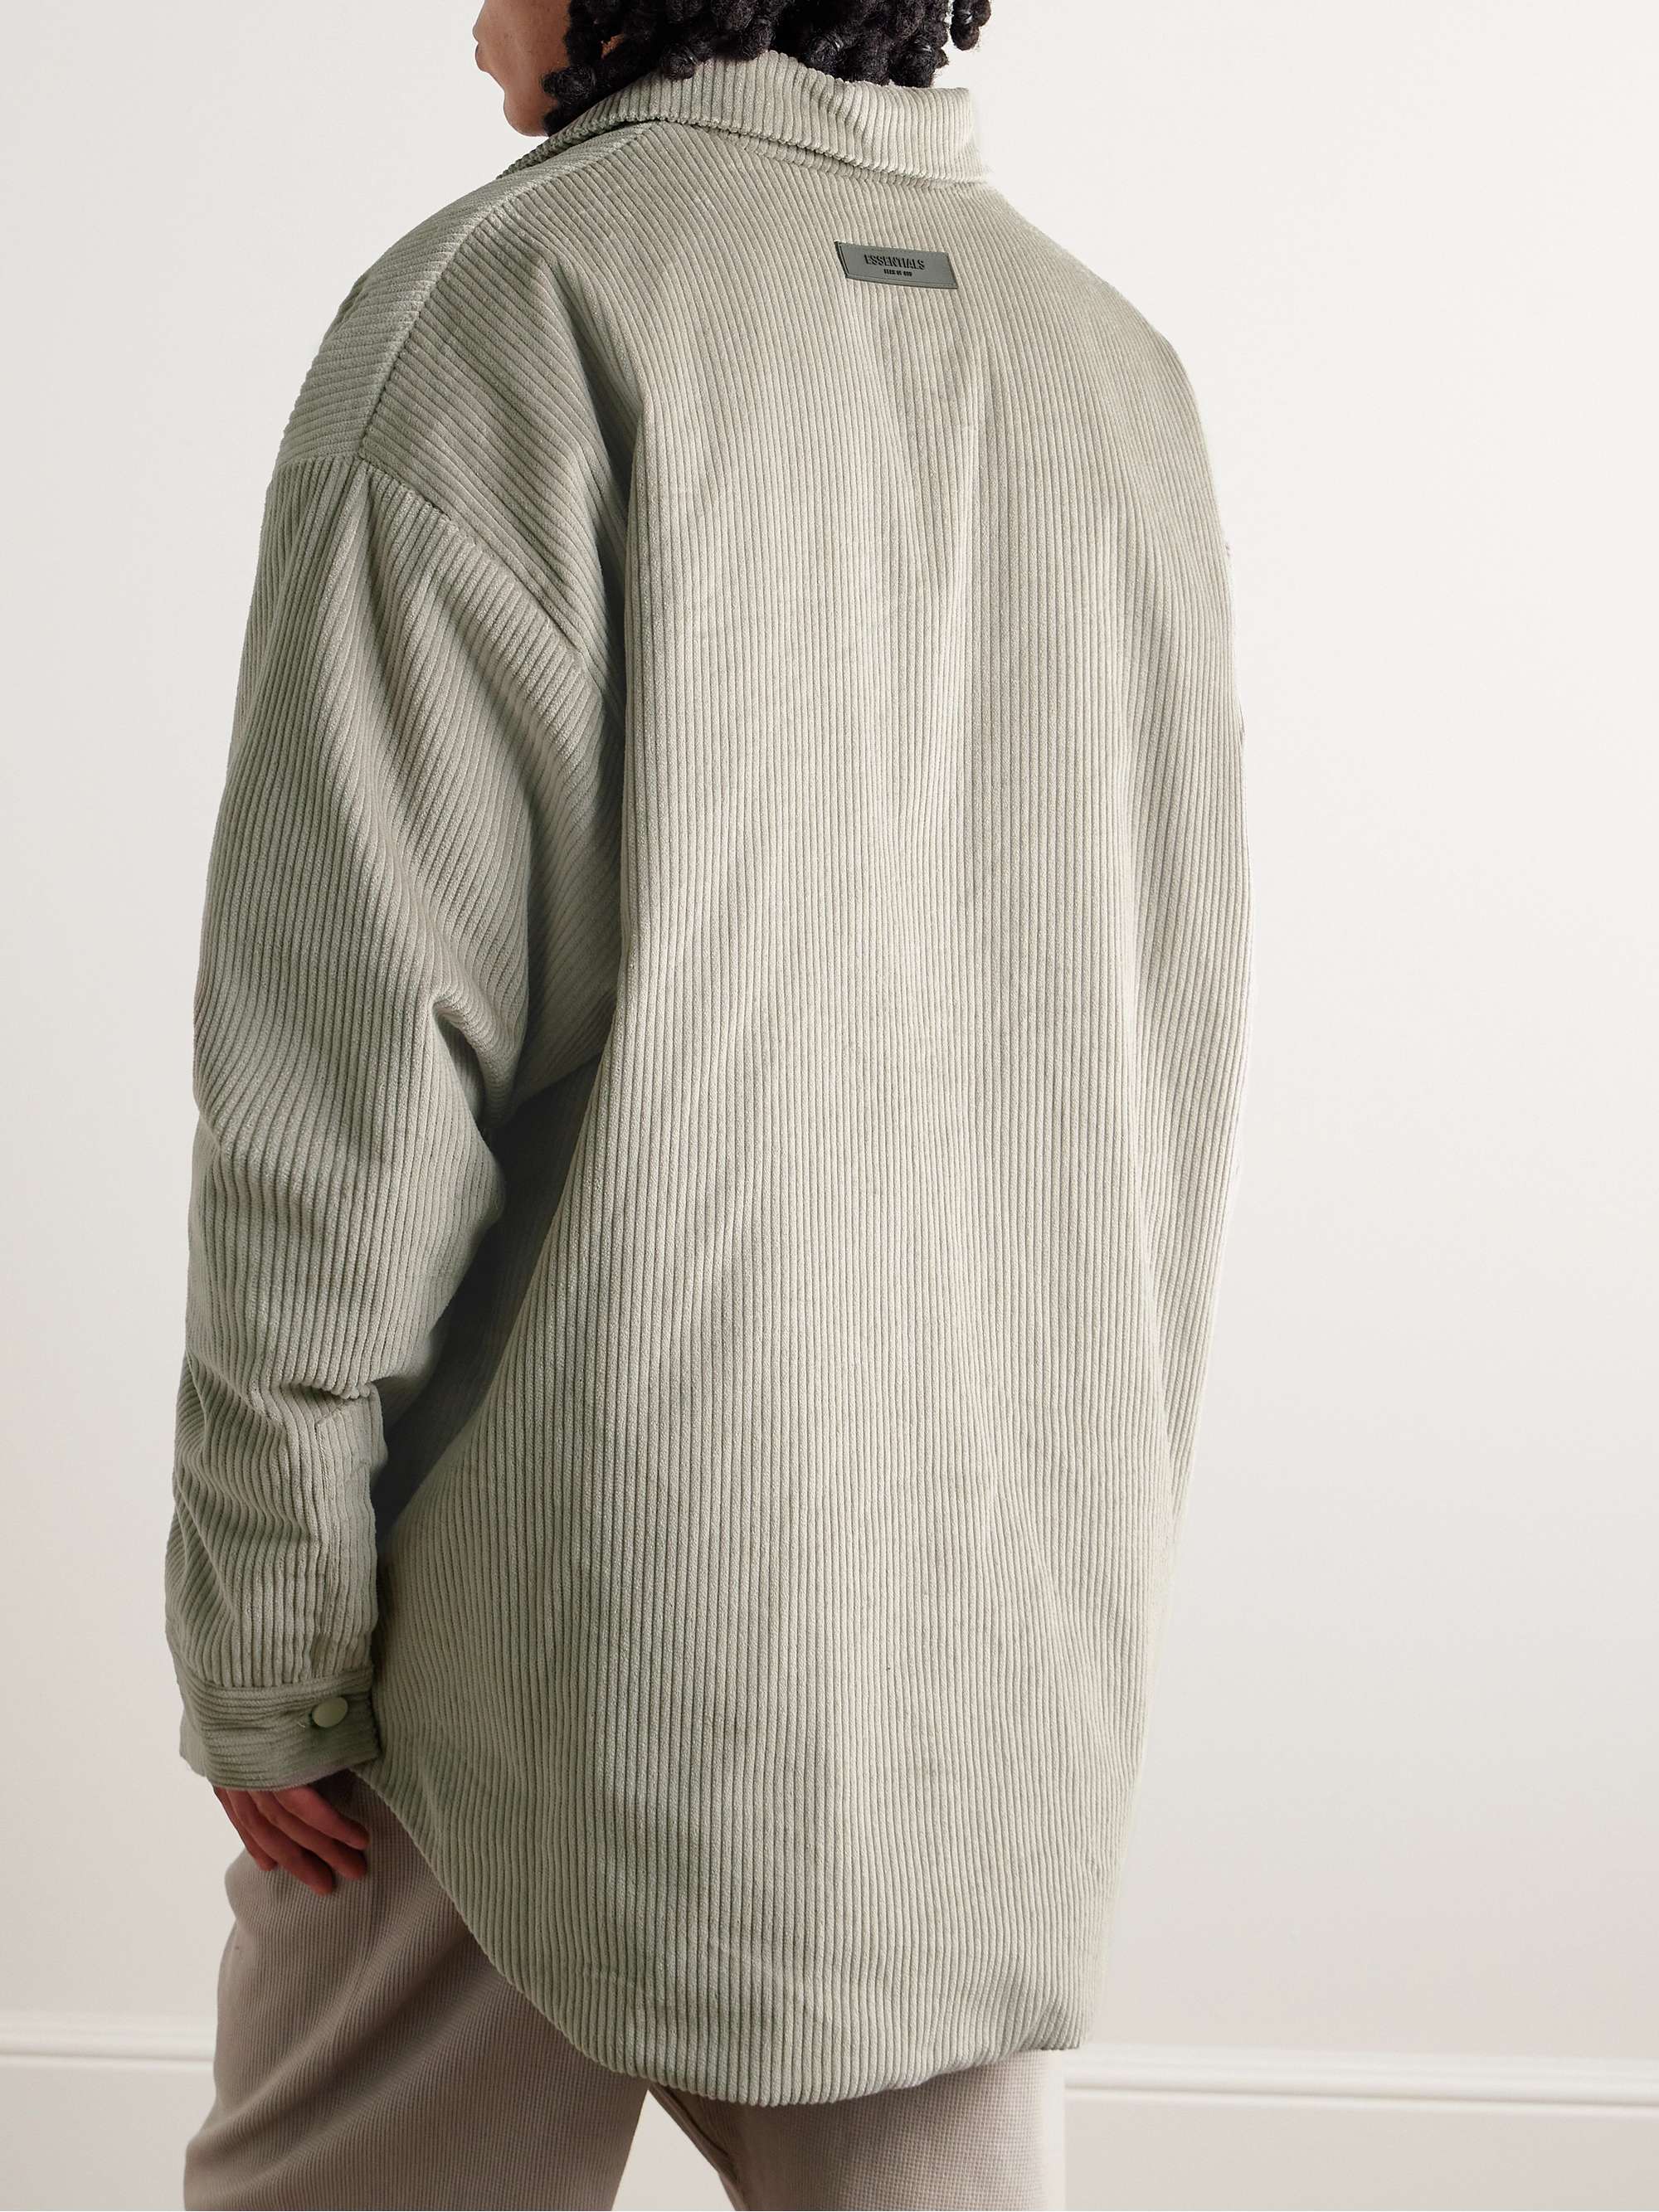 FEAR OF GOD ESSENTIALS Cotton-Corduroy Zip-Up Shirt Jacket for Men